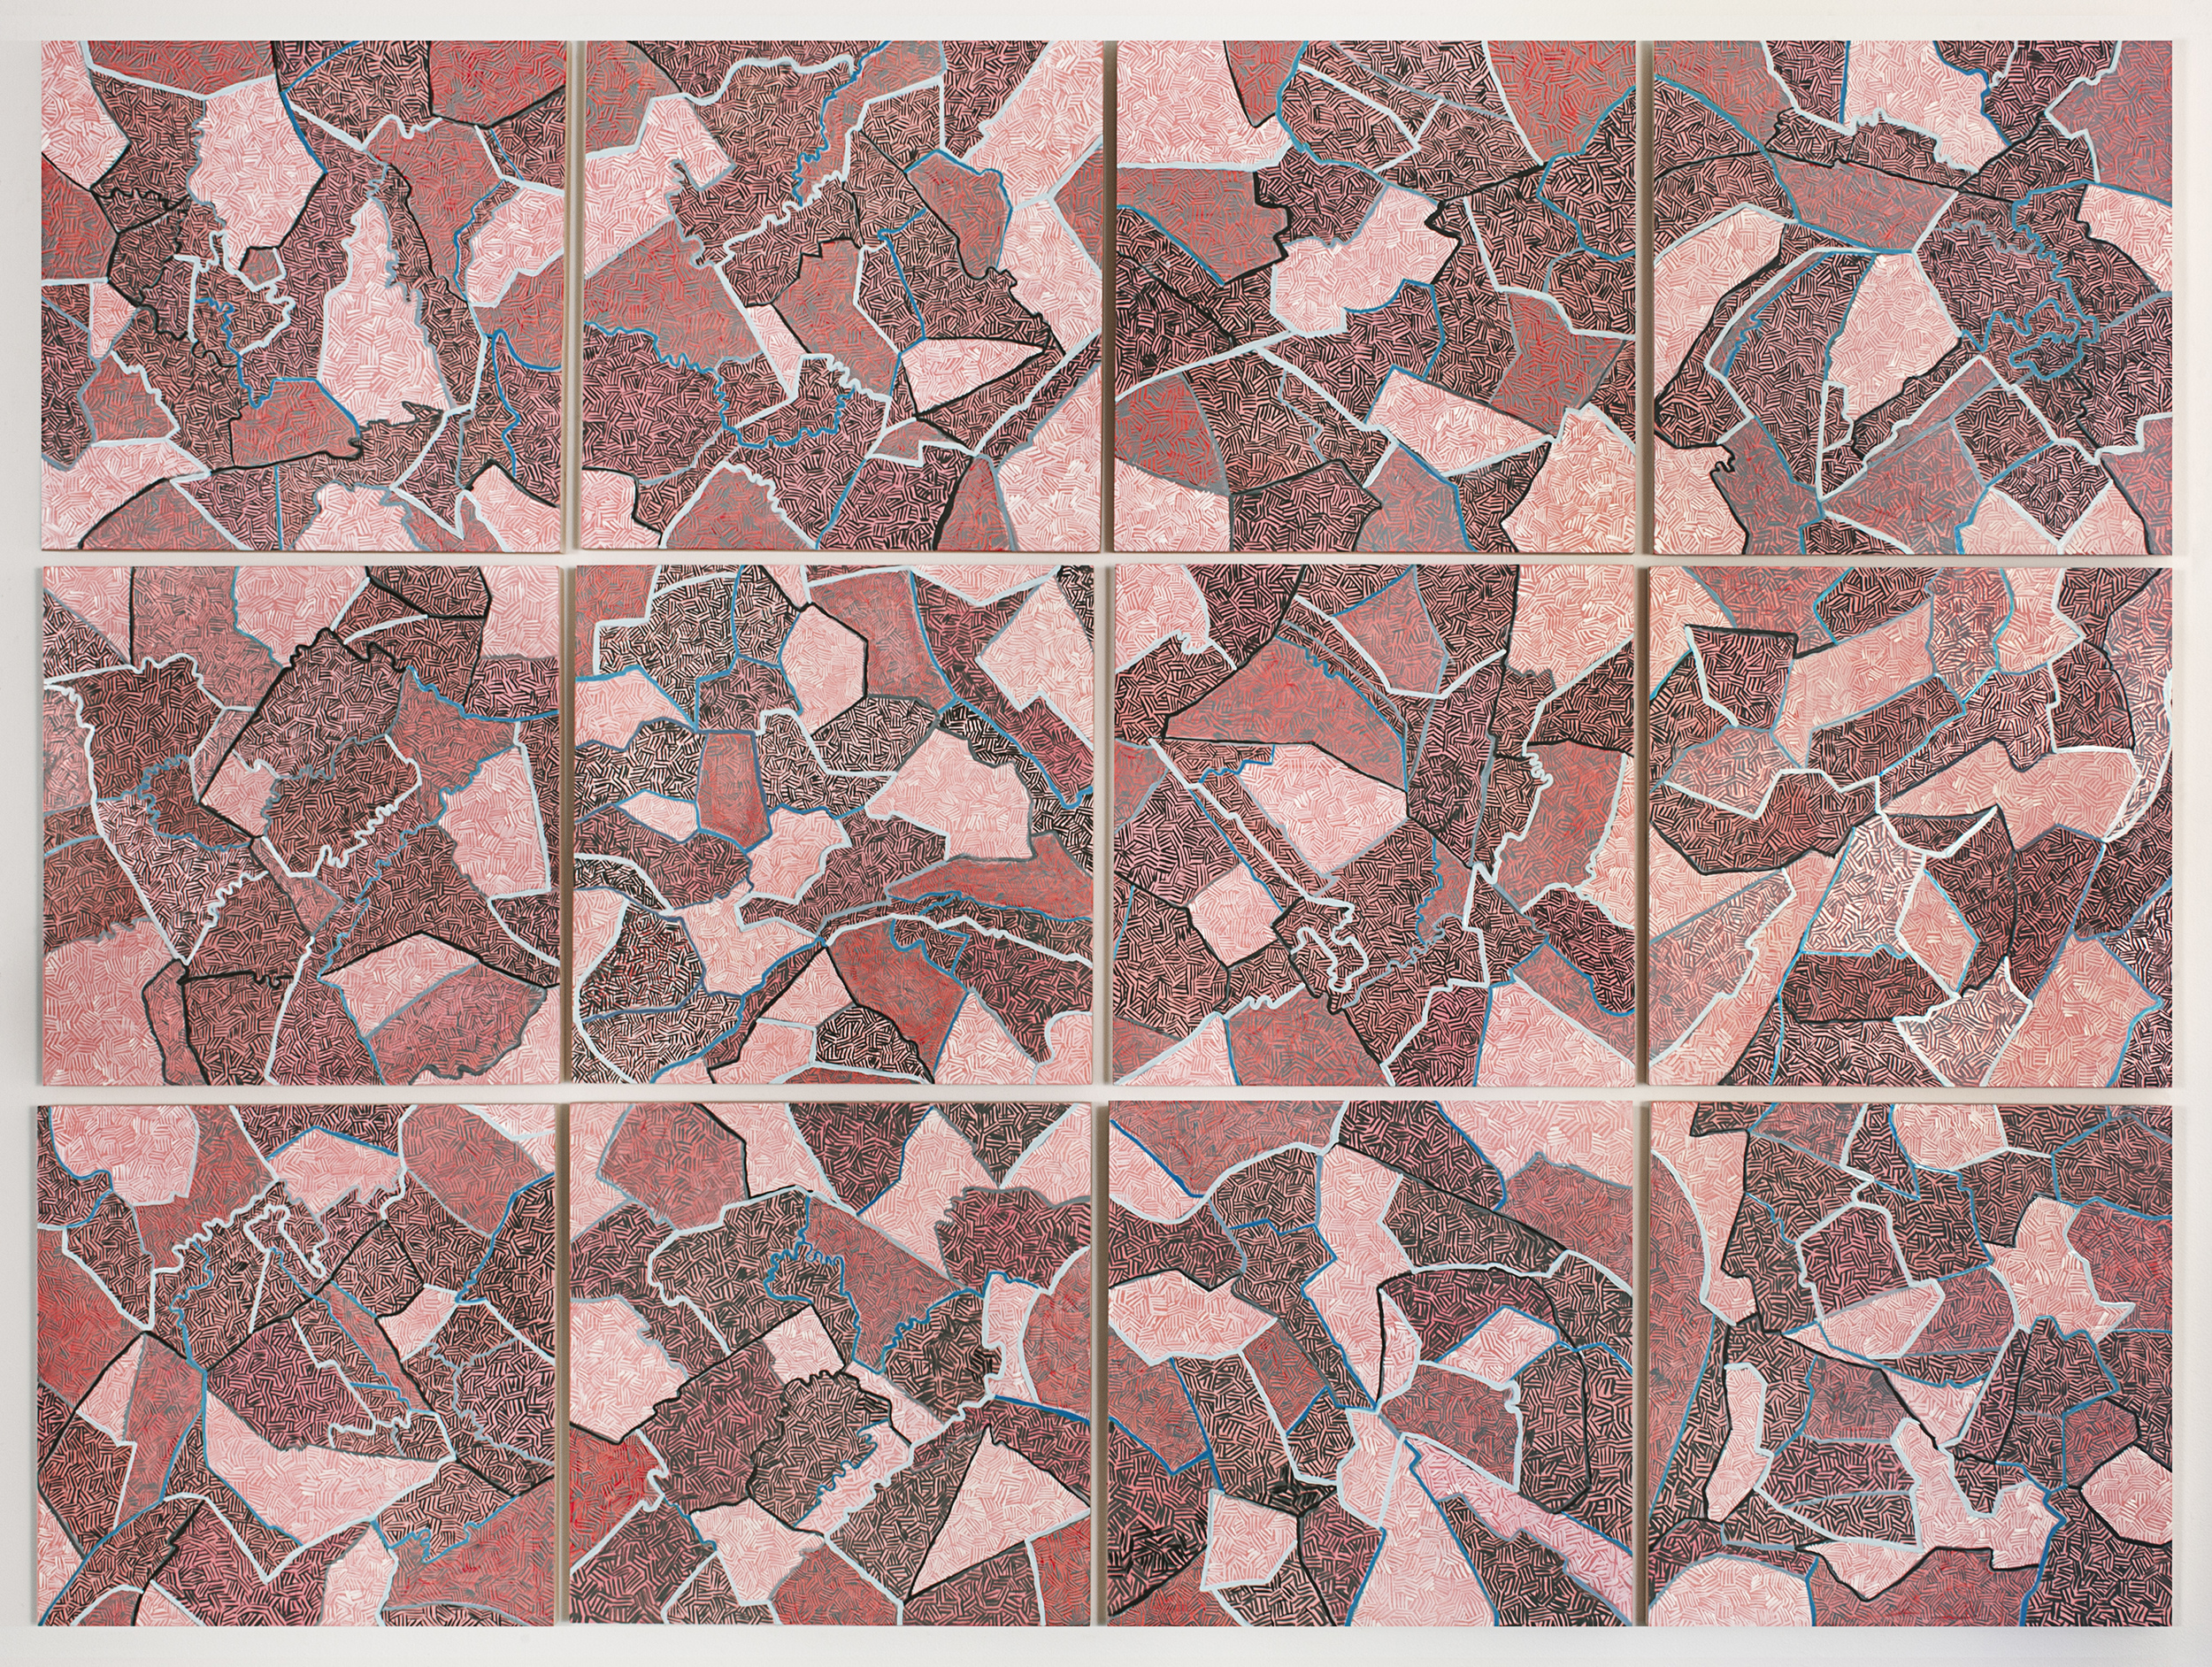    Grid IV, &nbsp;2015   Oil on paper mounted on panel, 12&nbsp;- 16" X 16"&nbsp;panels   49” X 66"  